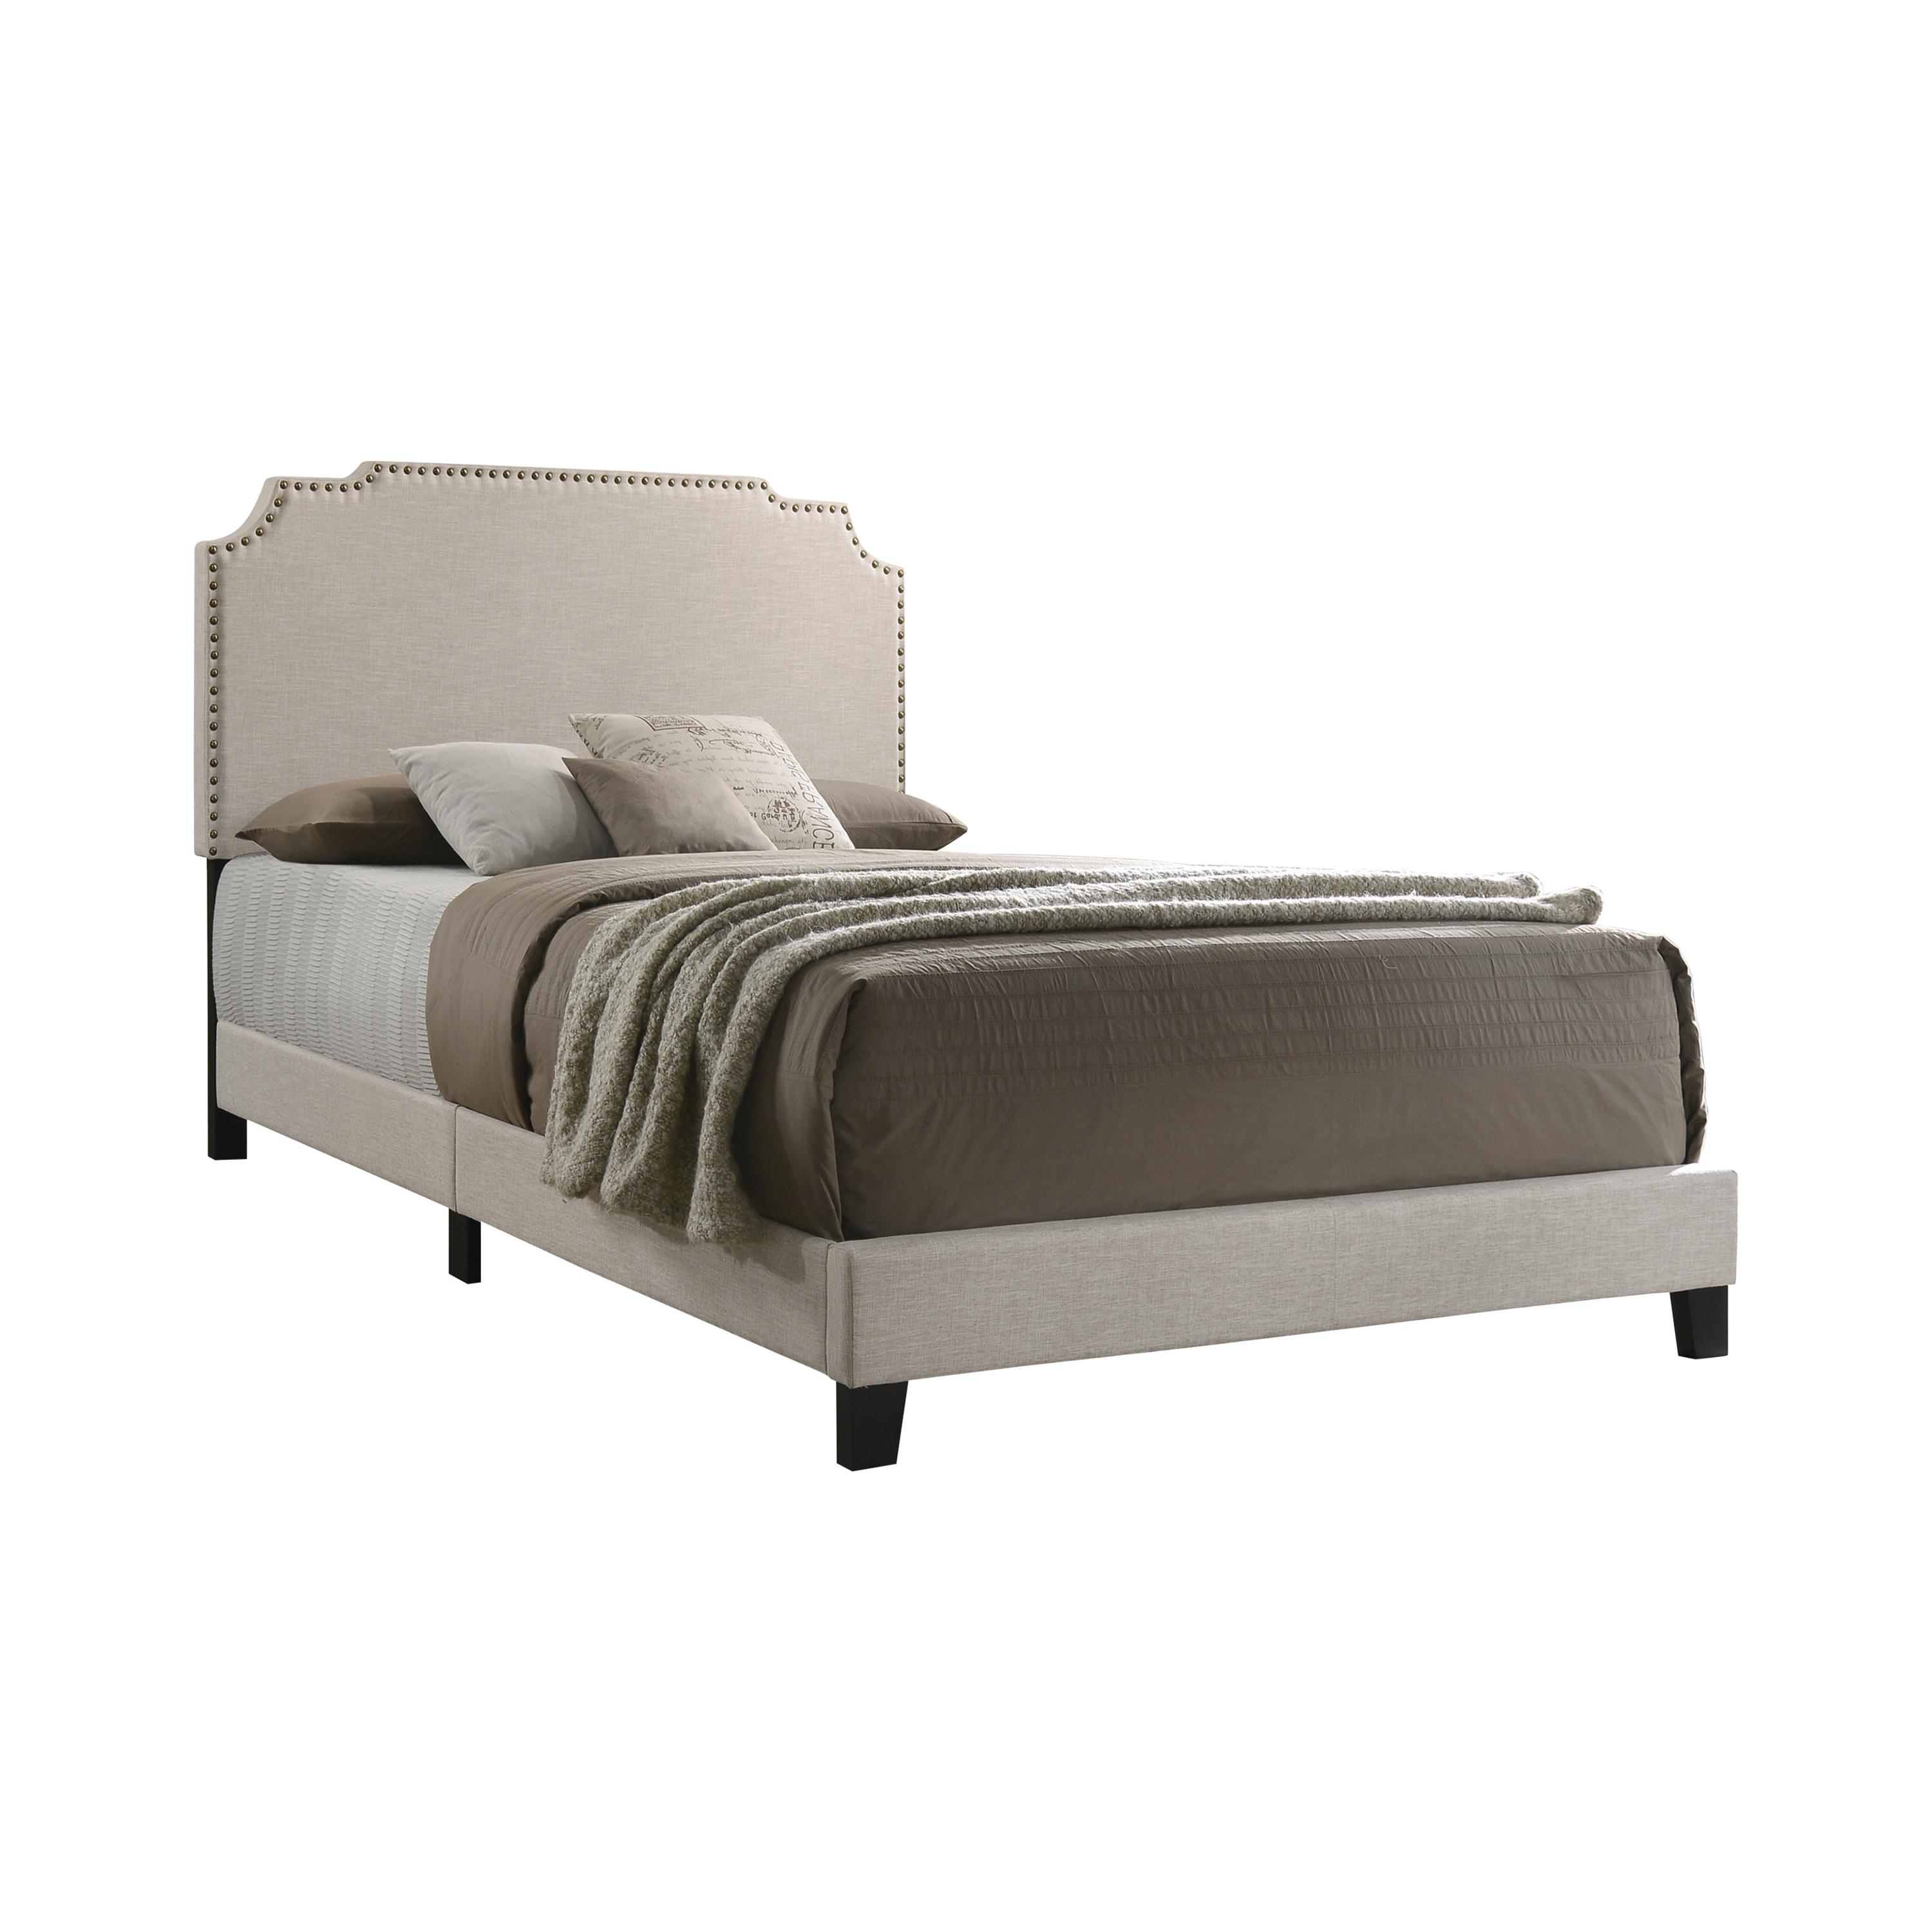 Contemporary Bed 310061F Tamarac 310061F in Beige Fabric